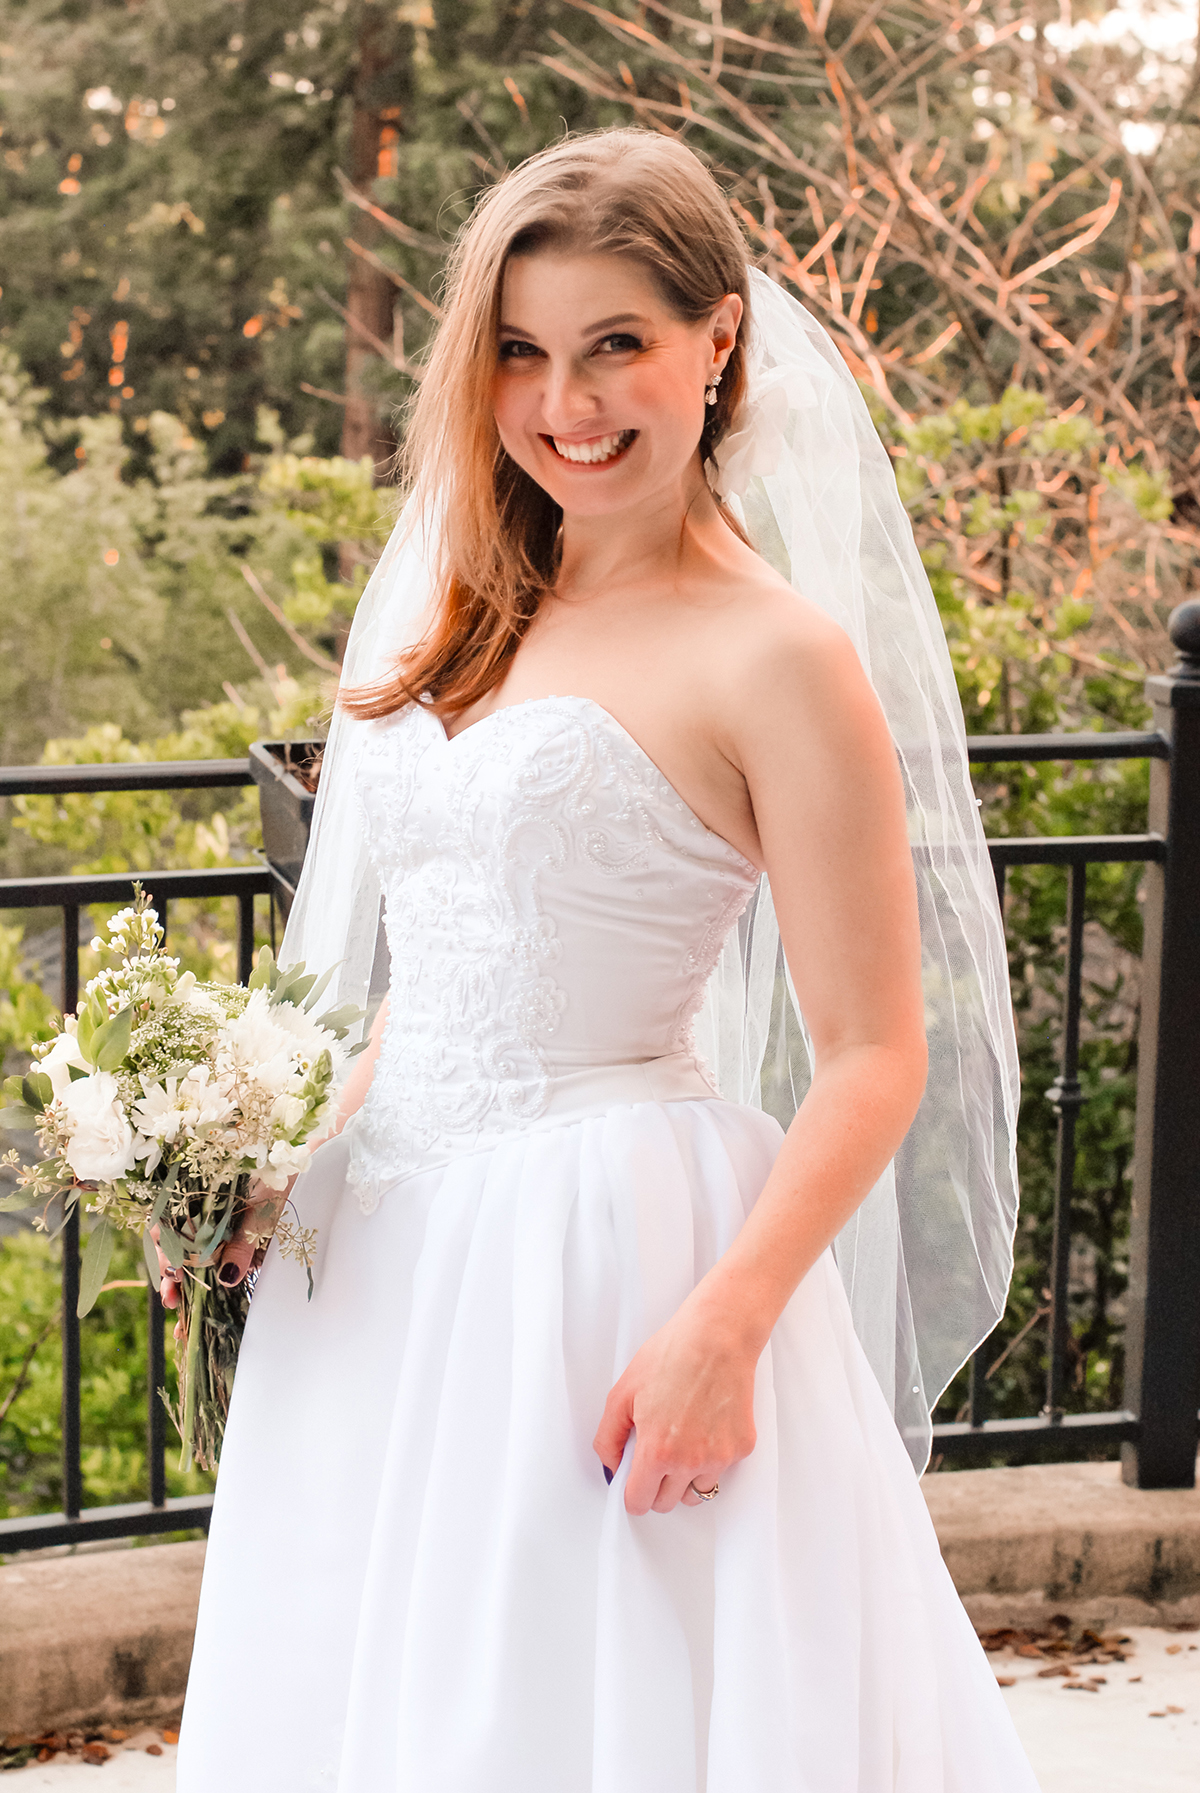 Devon smiling wearing a beaded ballgown wedding dress